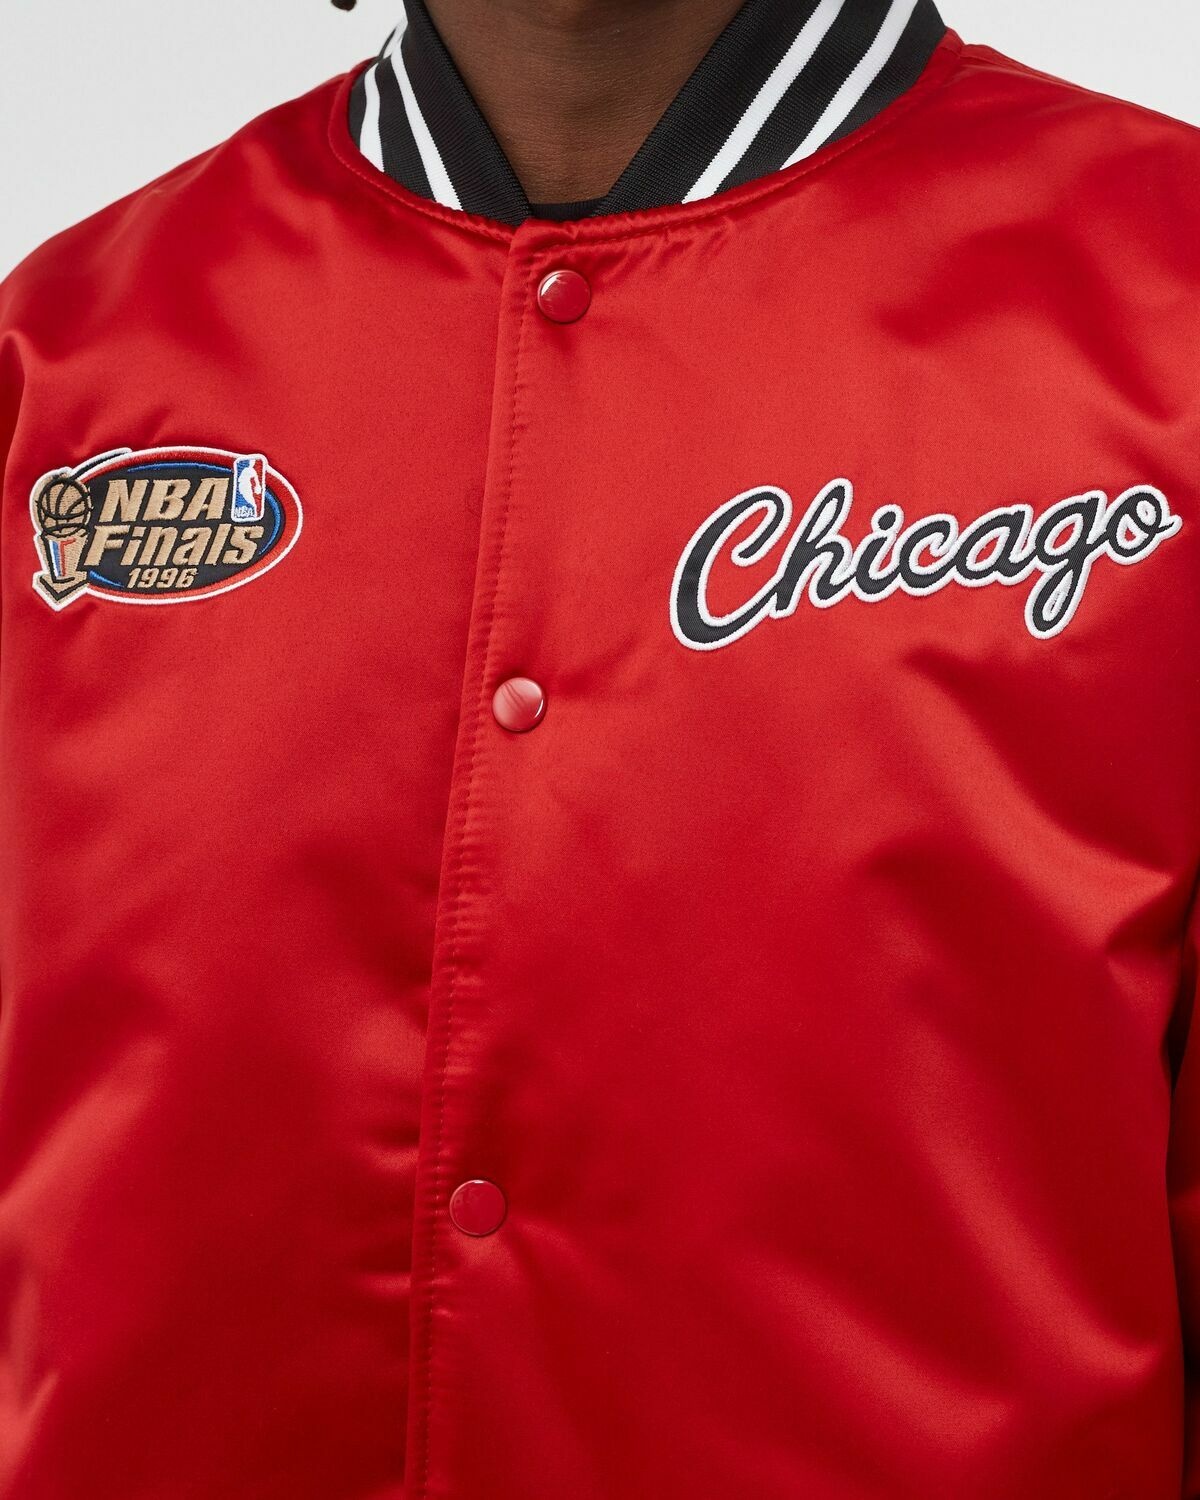 Mitchell & Ness Nba Heavyweight Satin Jacket Chicago Bulls Red - Mens - College Jackets/Team Jackets